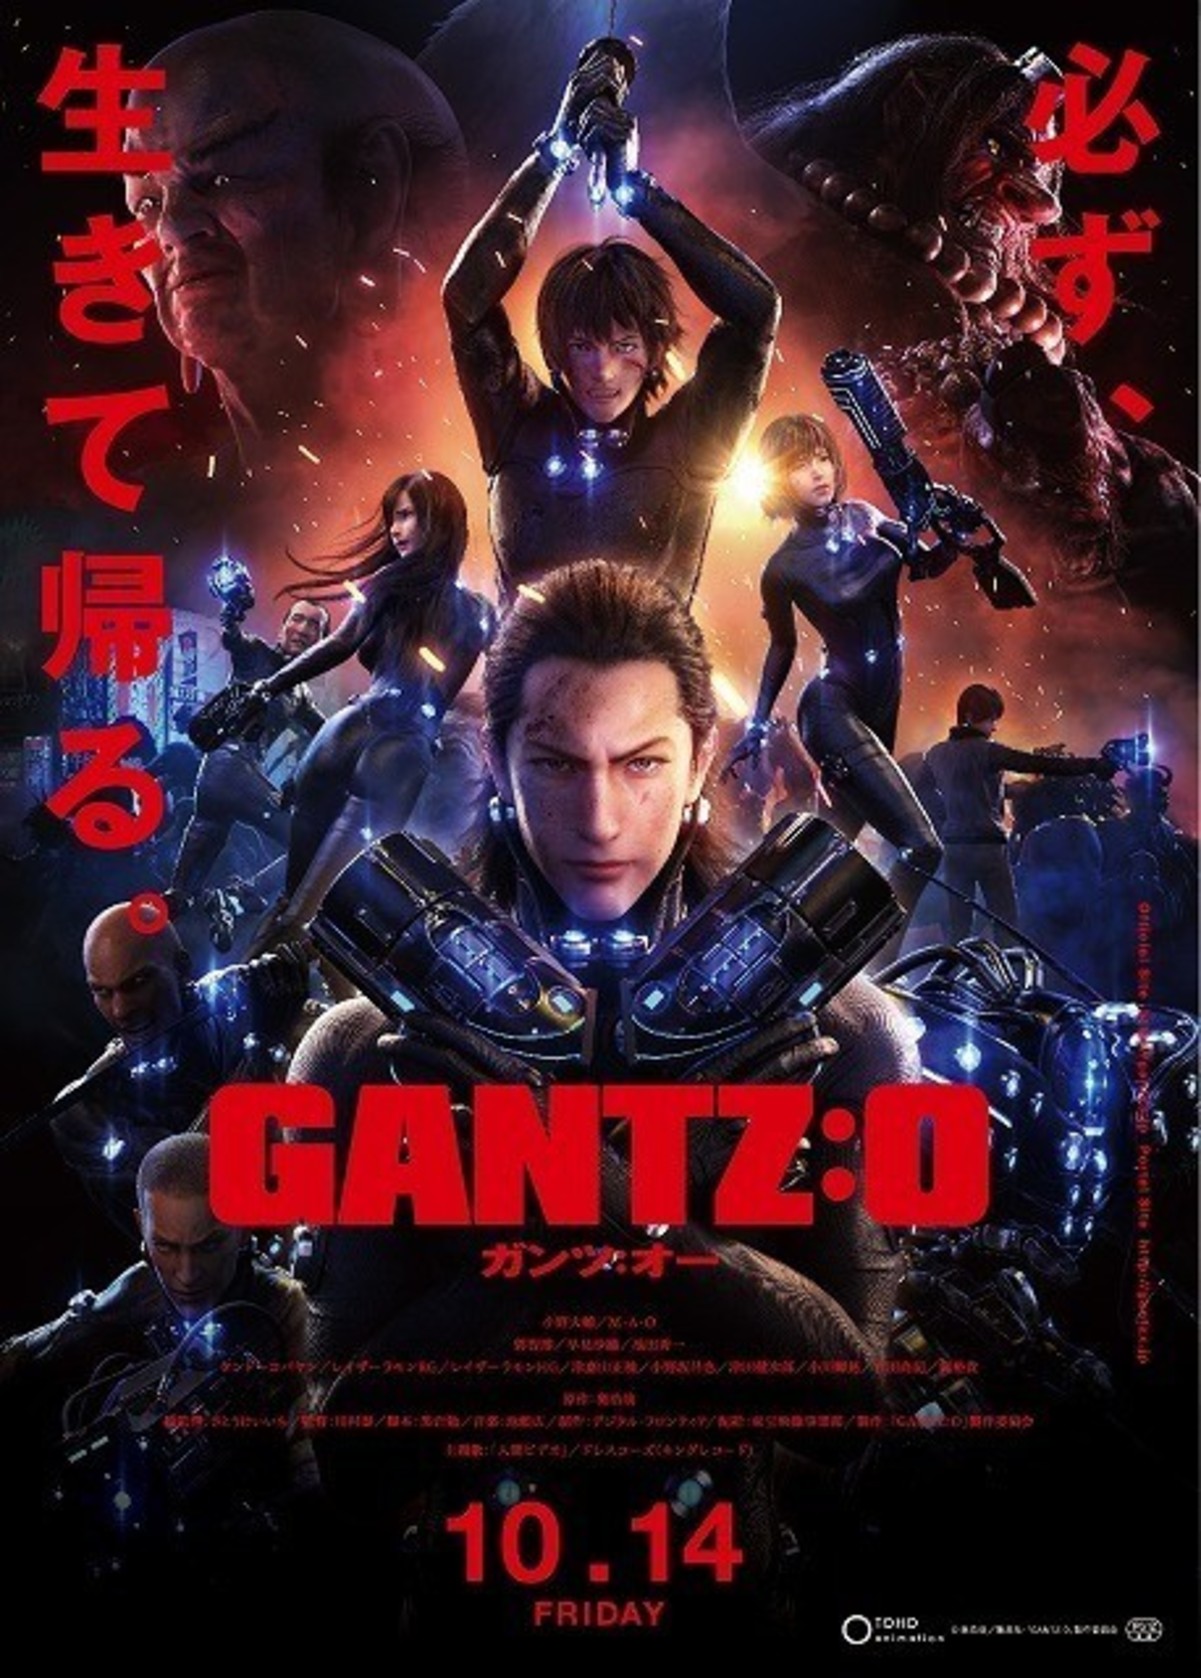 Gantz O 新ポスター 予告編が完成 大阪チームキャストはケンコバら人気芸人 映画ニュース 映画 Com